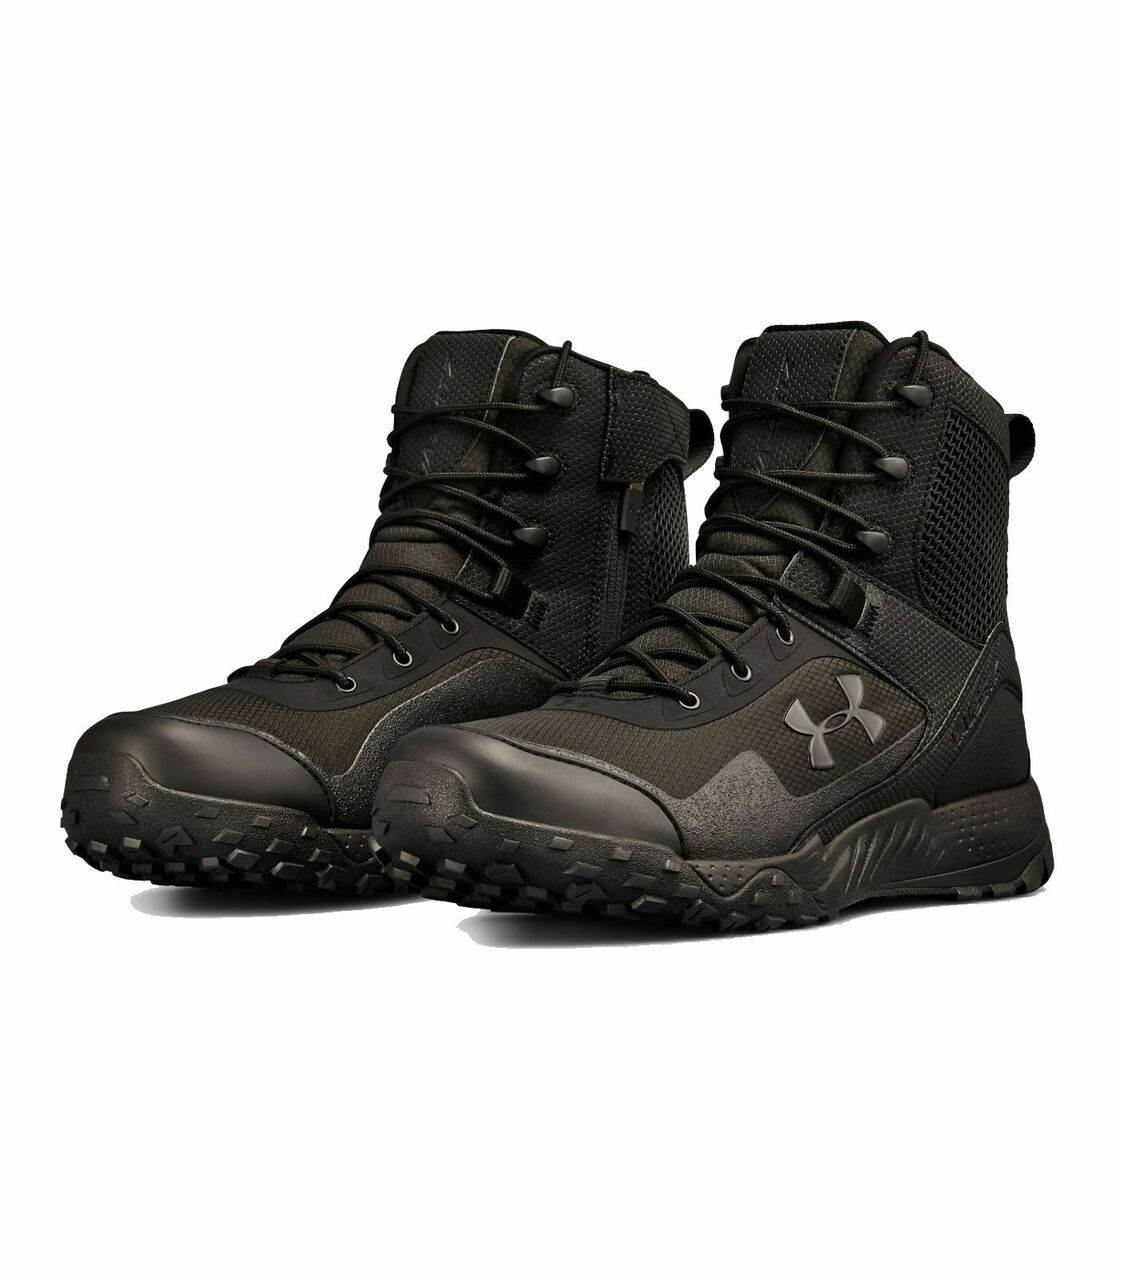 Under Armour - Men's UA Valsetz 2.0 Tactical Boots